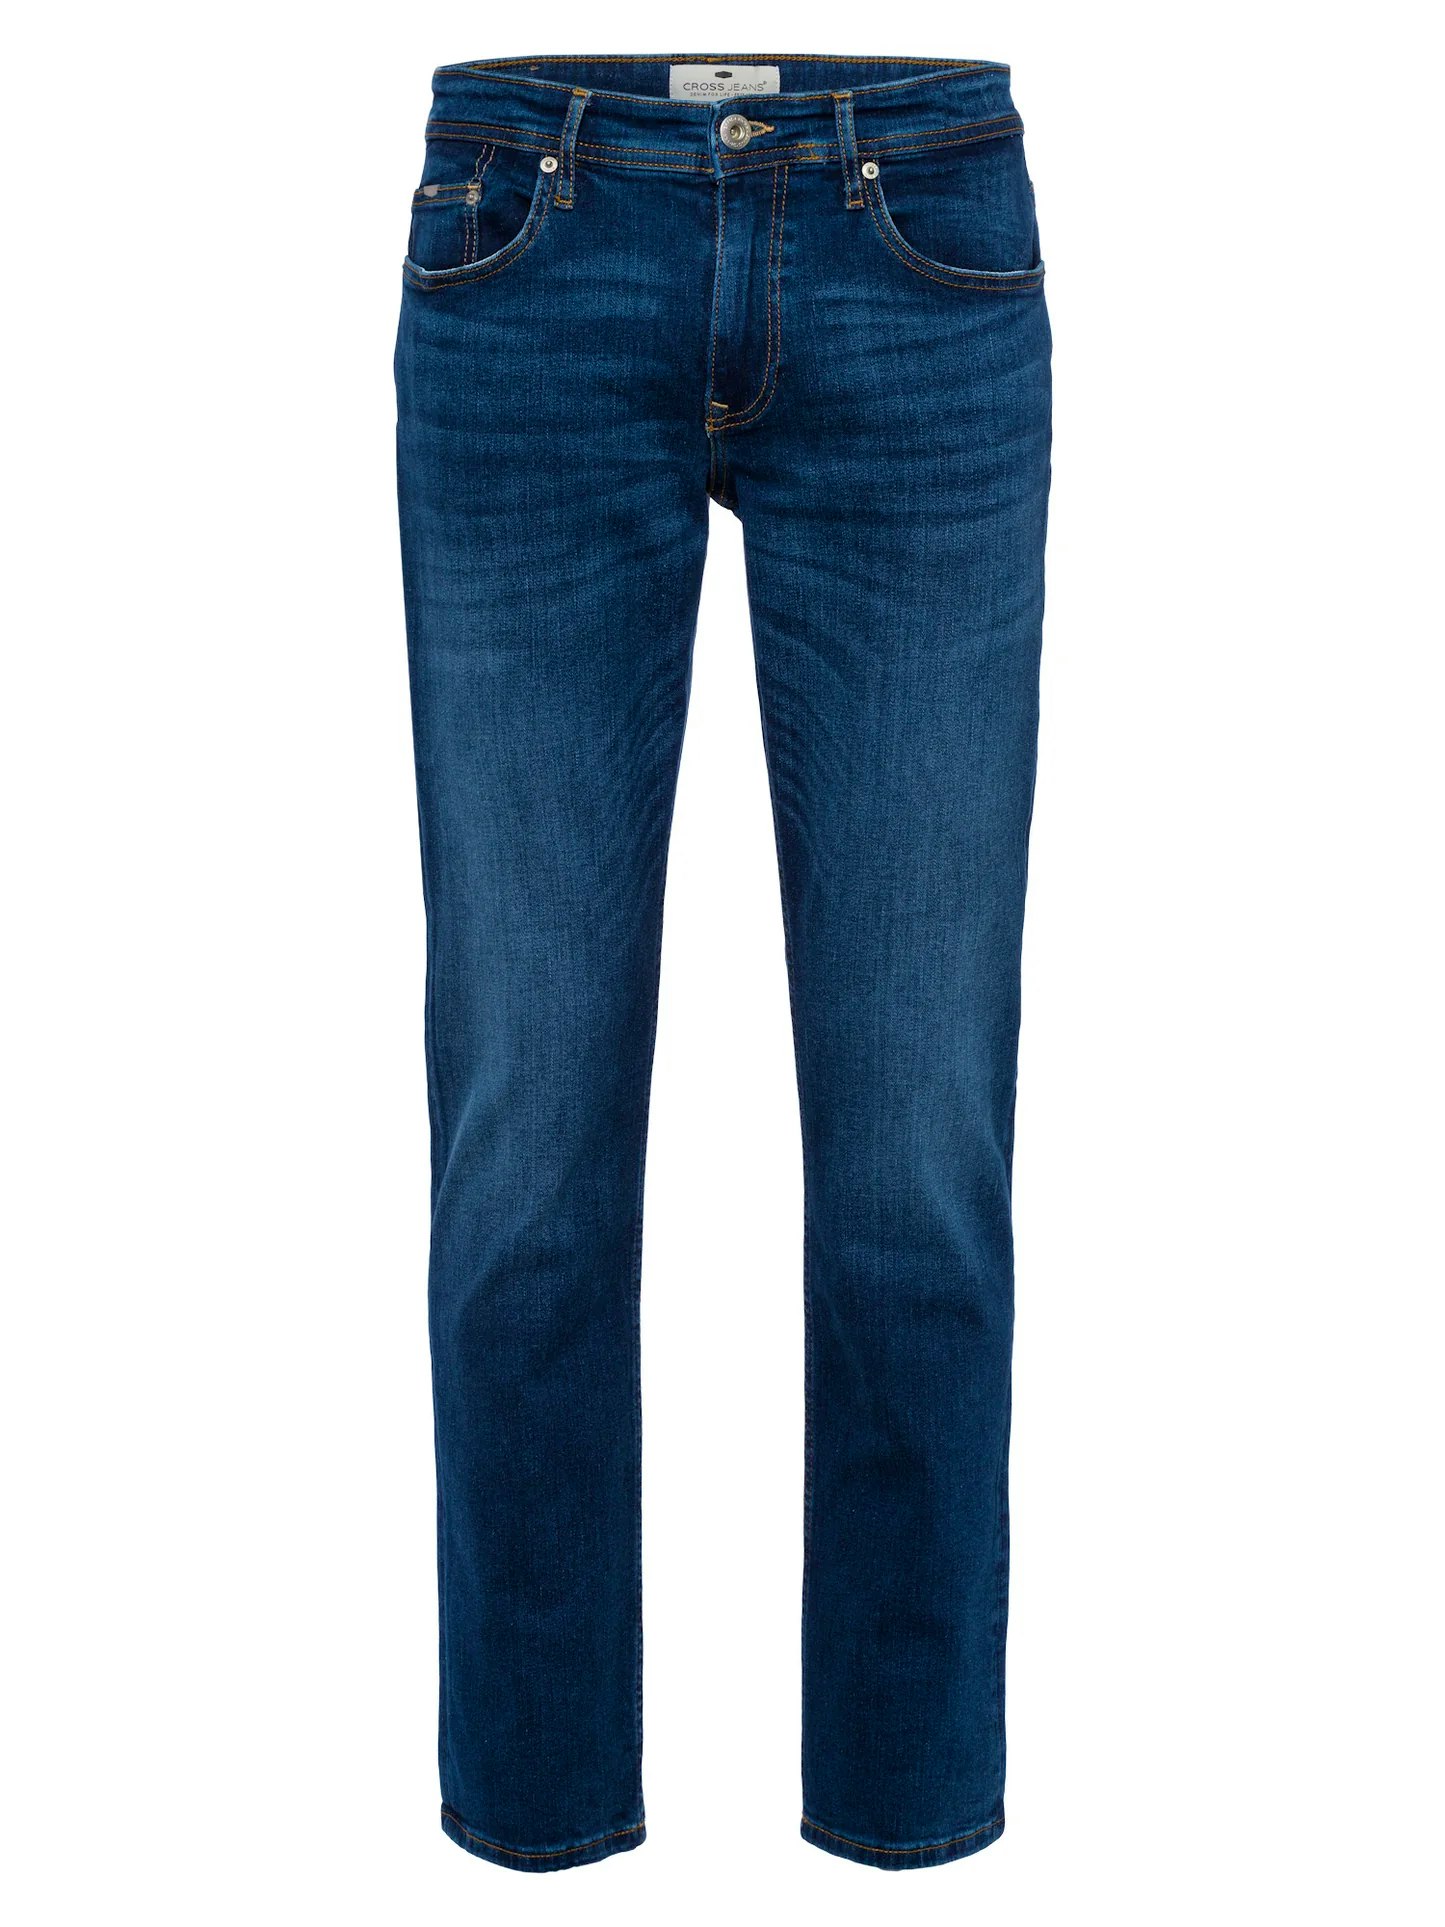 Cross Jeans Dylan Regular Fit deep blue used